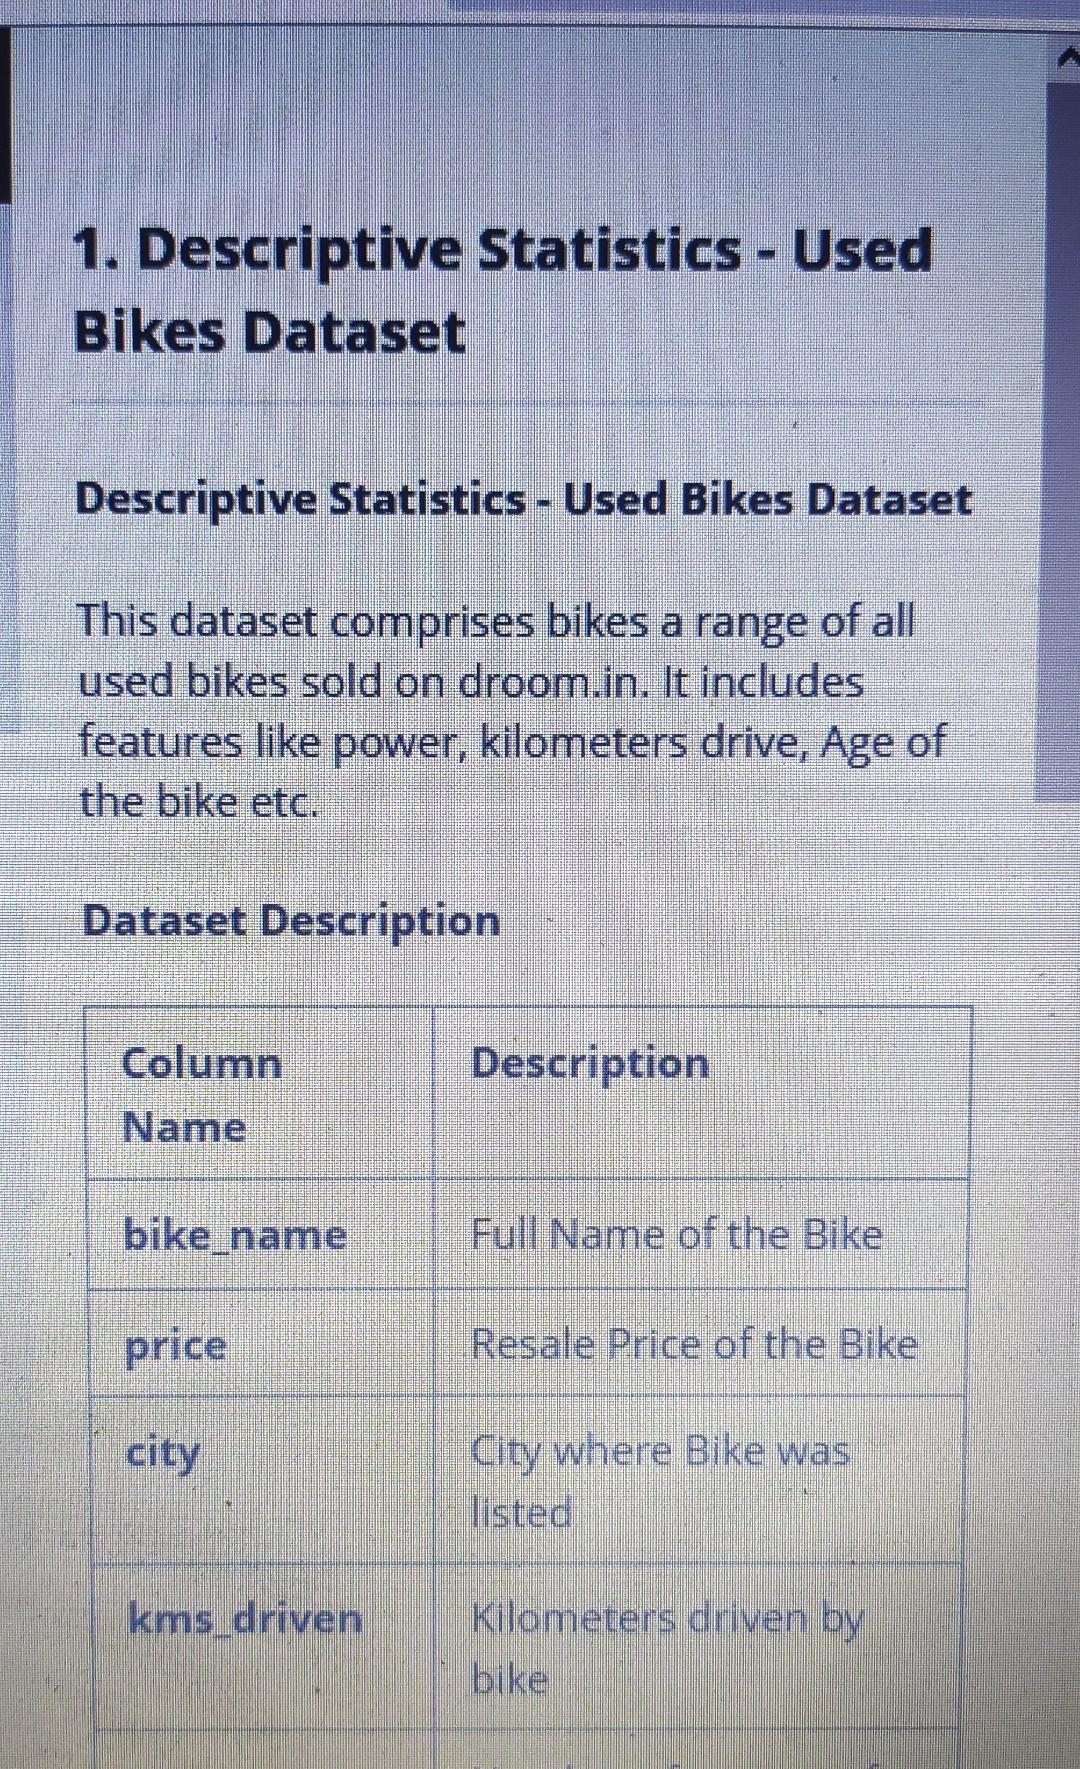 hypothesis testing on used bikes dataset